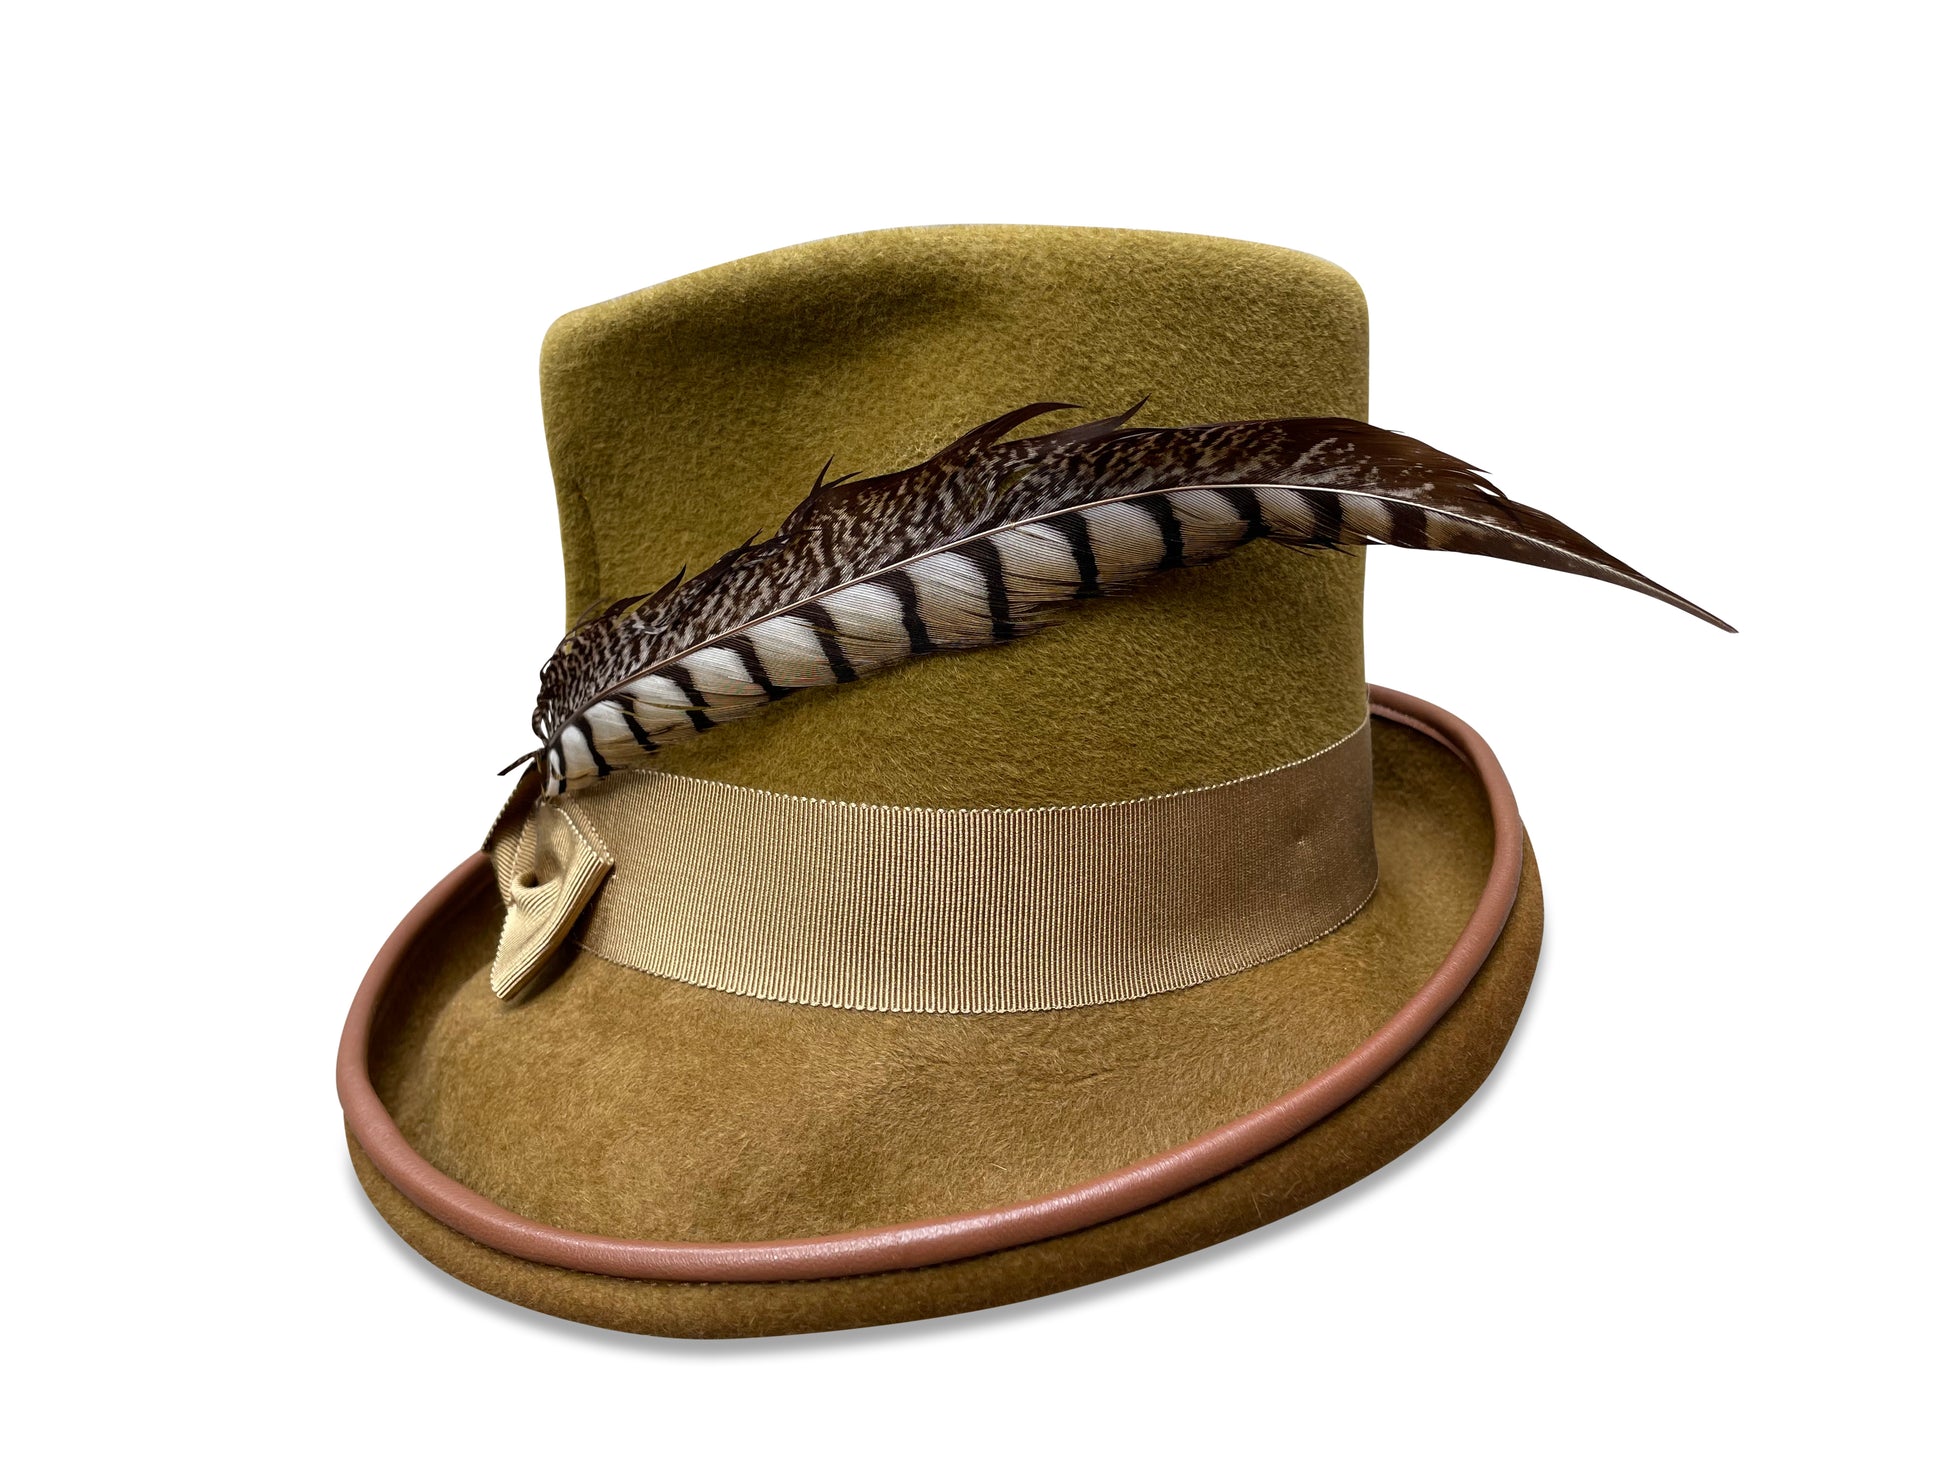 El Diablo Gold Fur Felt Top Hat from Cha Cha's House of Ill Repute